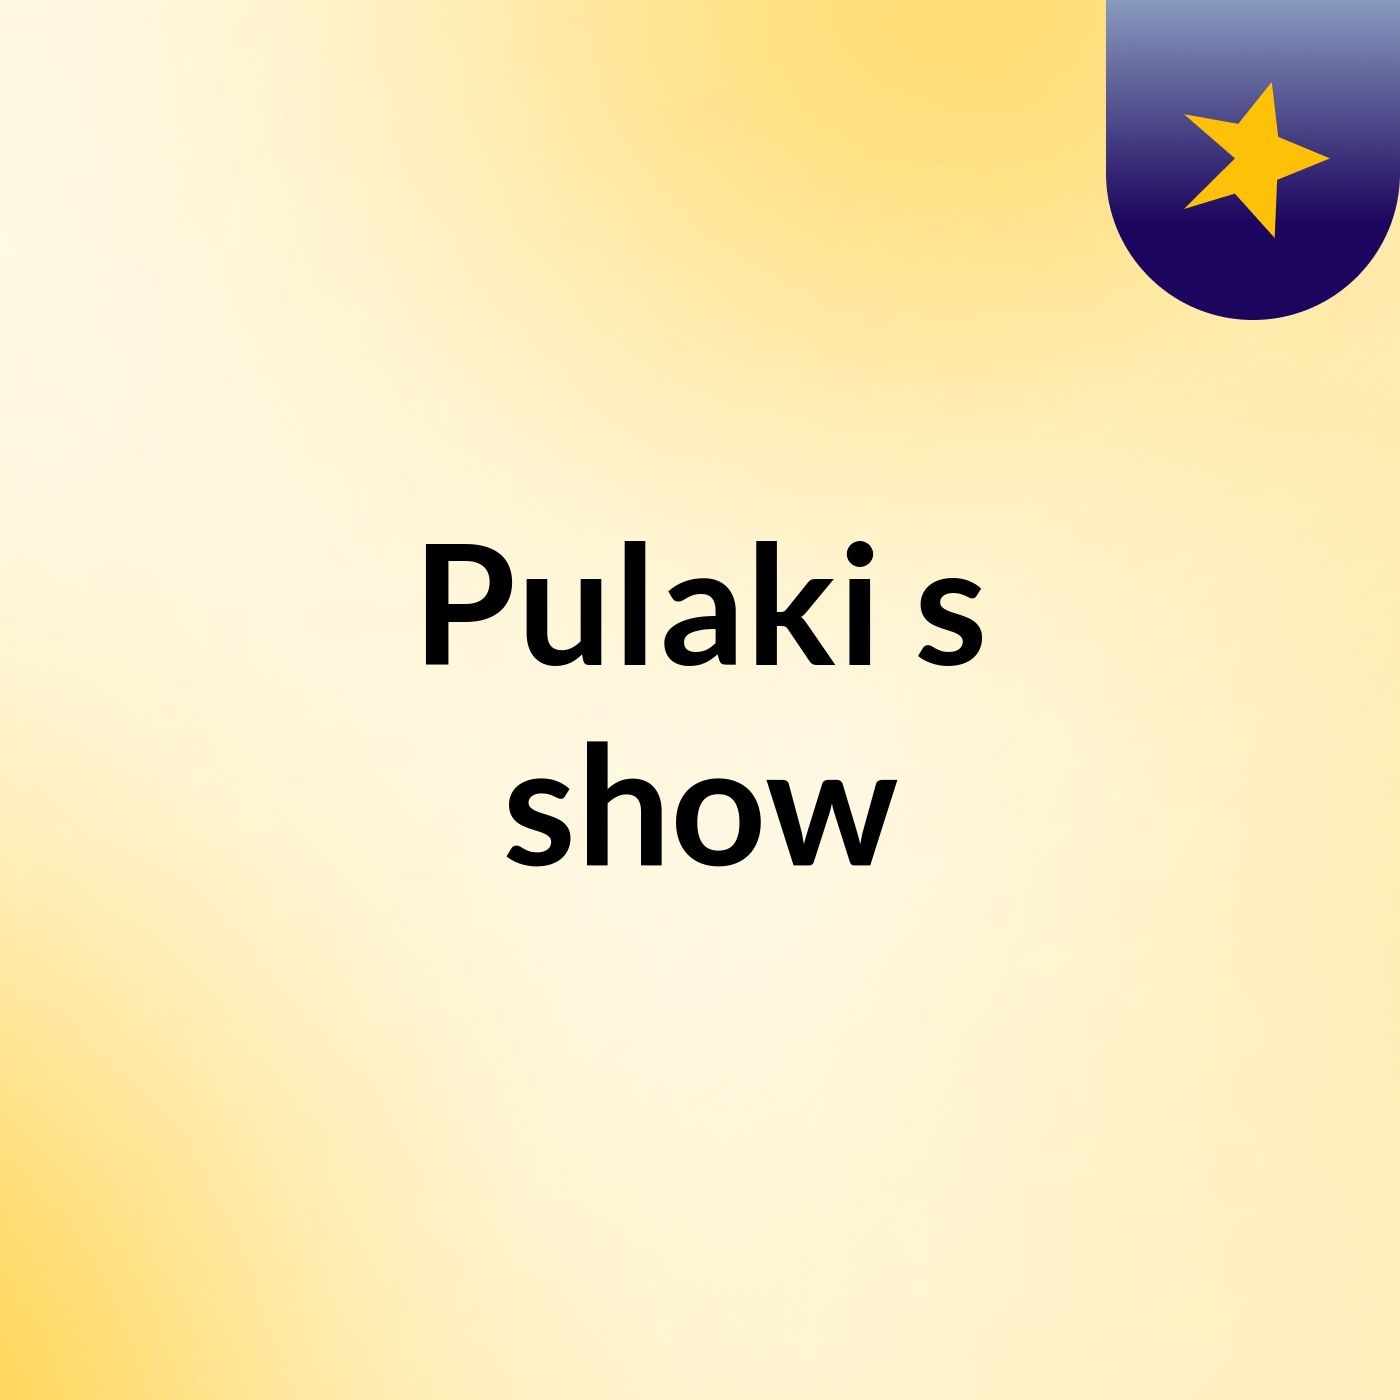 Pulaki's show